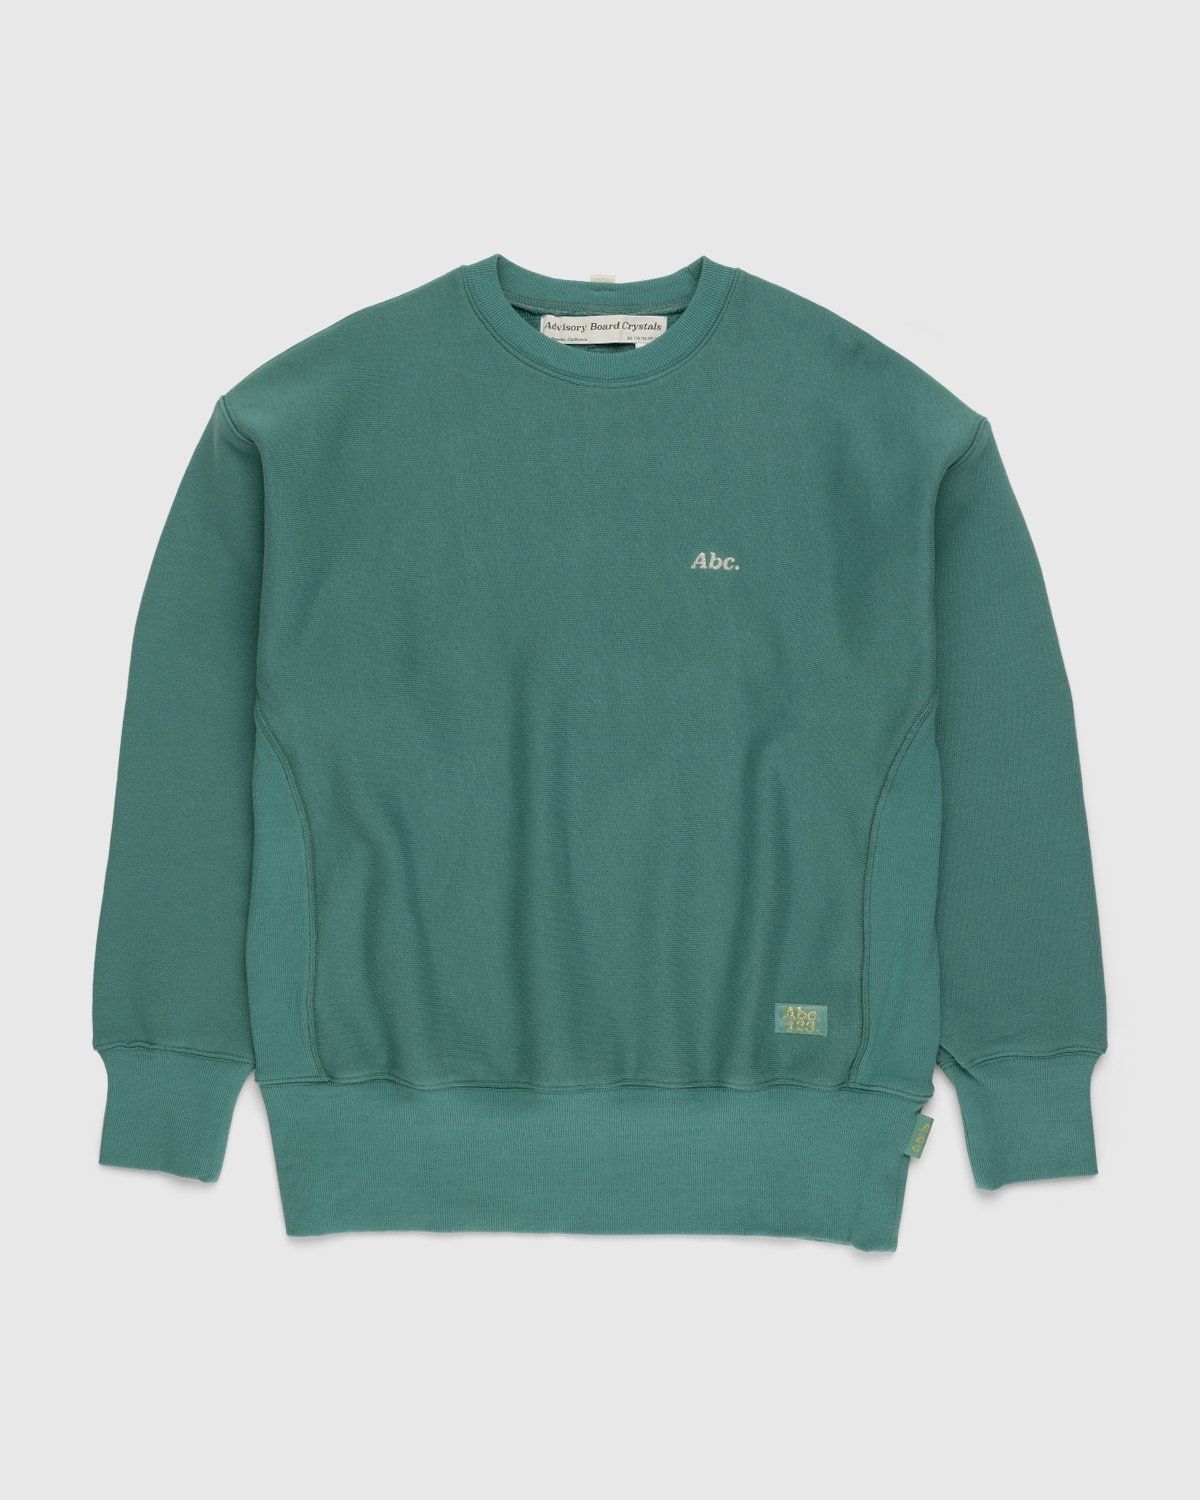 Abc. – French Terry Crewneck Sweatshirt Apatite - Sweats - Green - Image 1